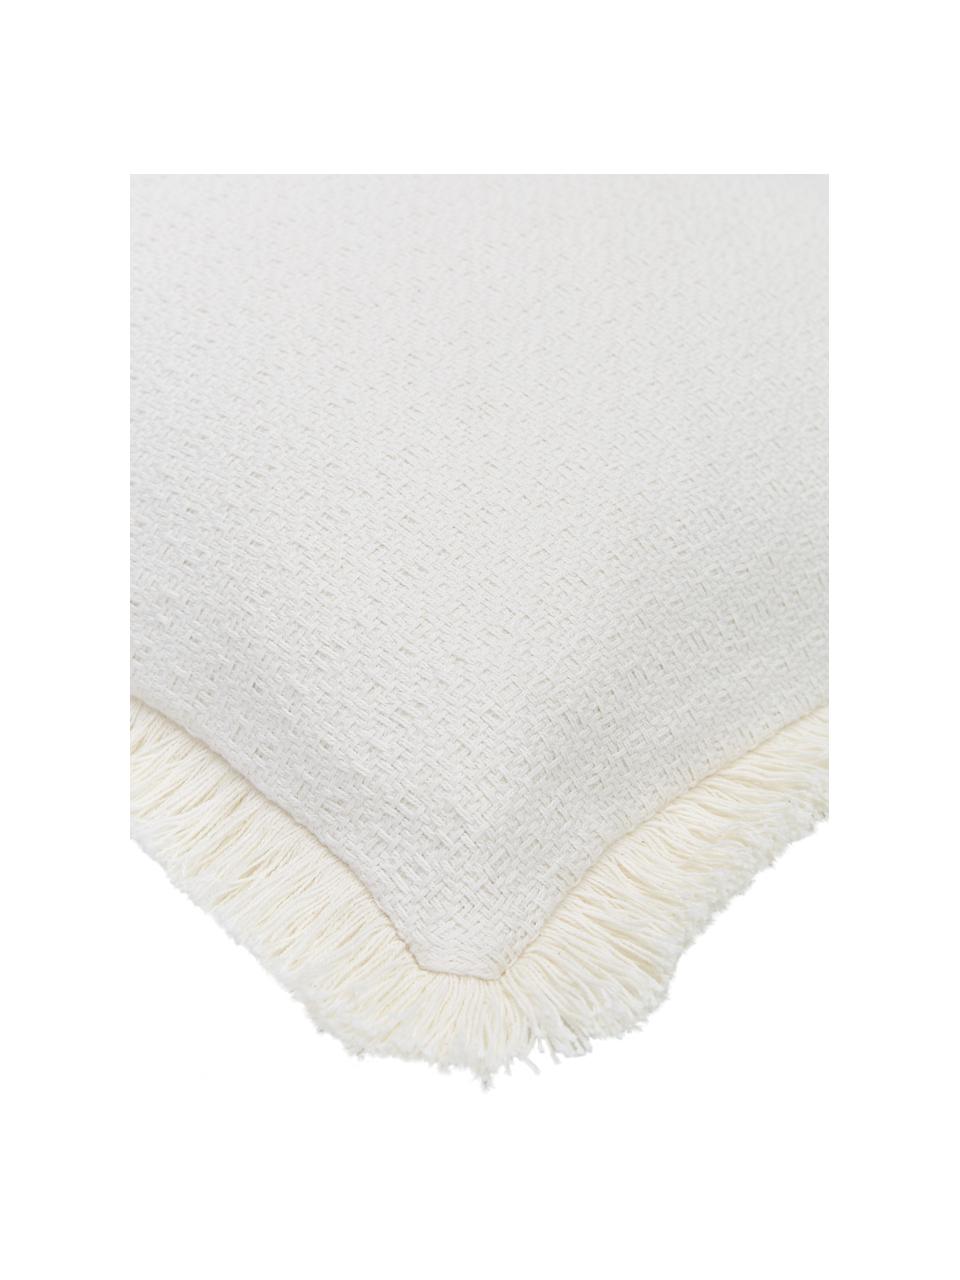 Povlak na polštář s ozdobnými třásněmi Lorel, 100% bavlna, Bílá, Š 40 cm, D 40 cm